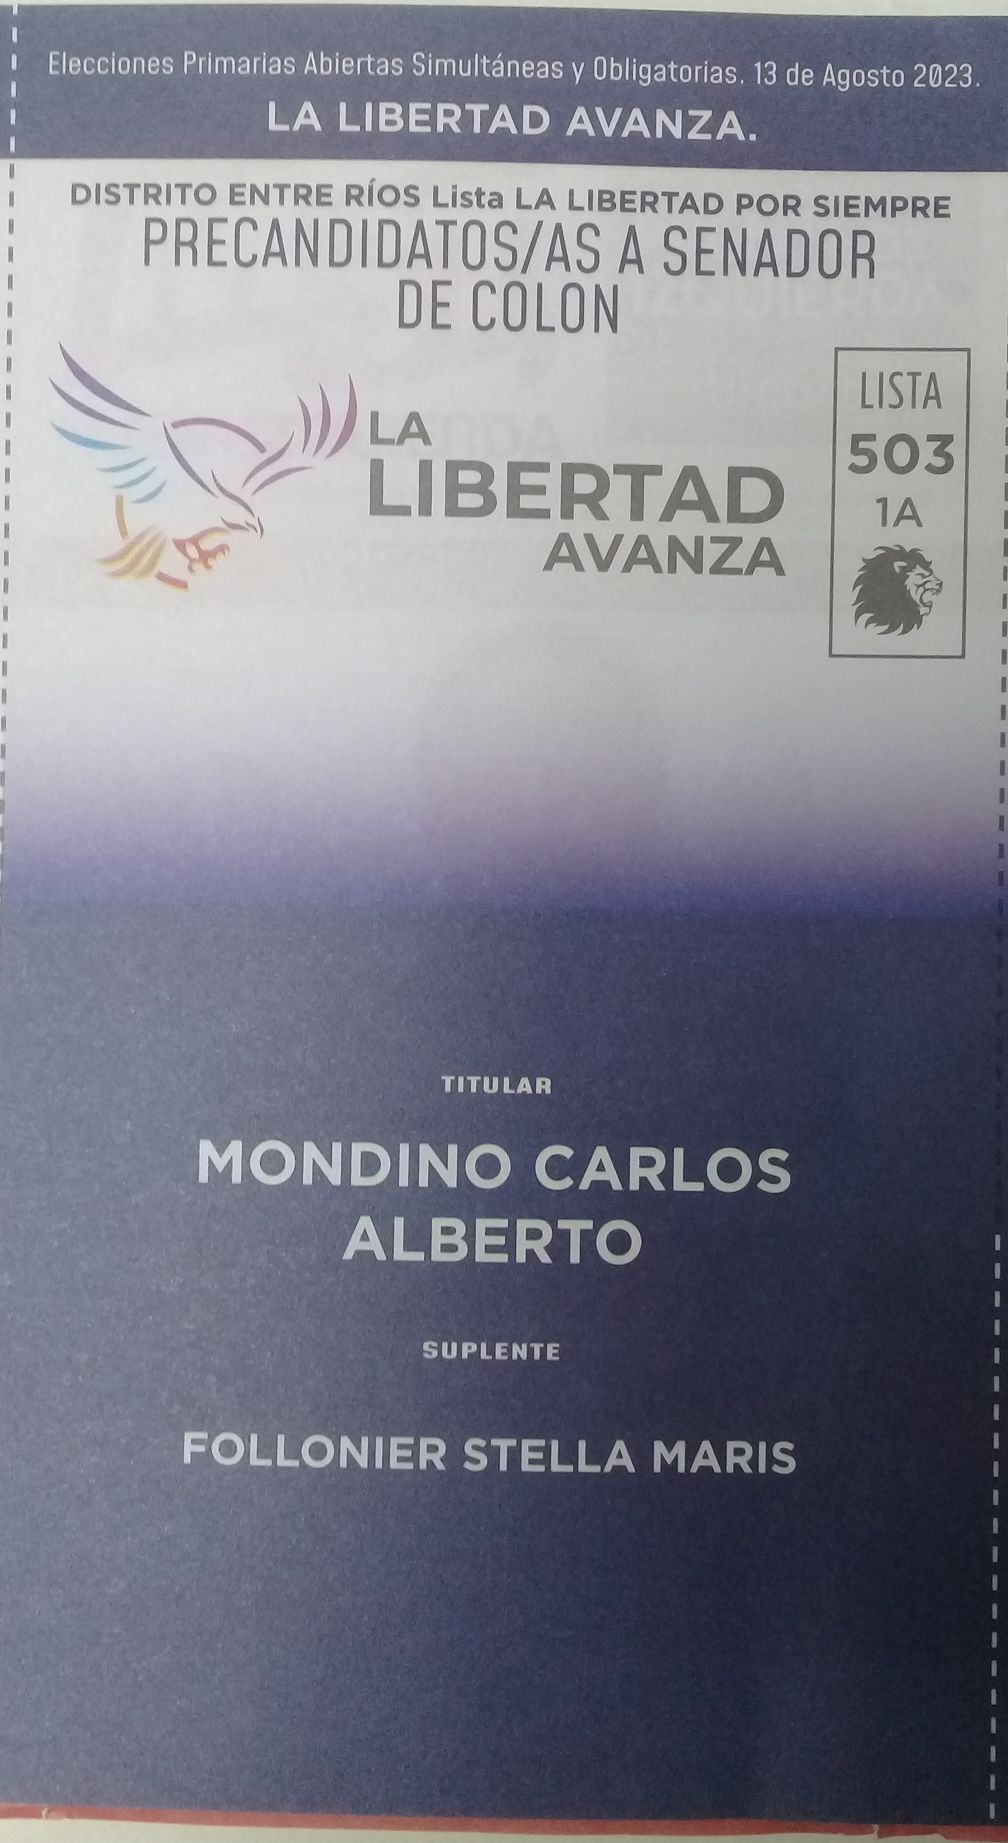 Lista 503, La Libertad Avanza, encabezada por Carlos Alberto Mondino.